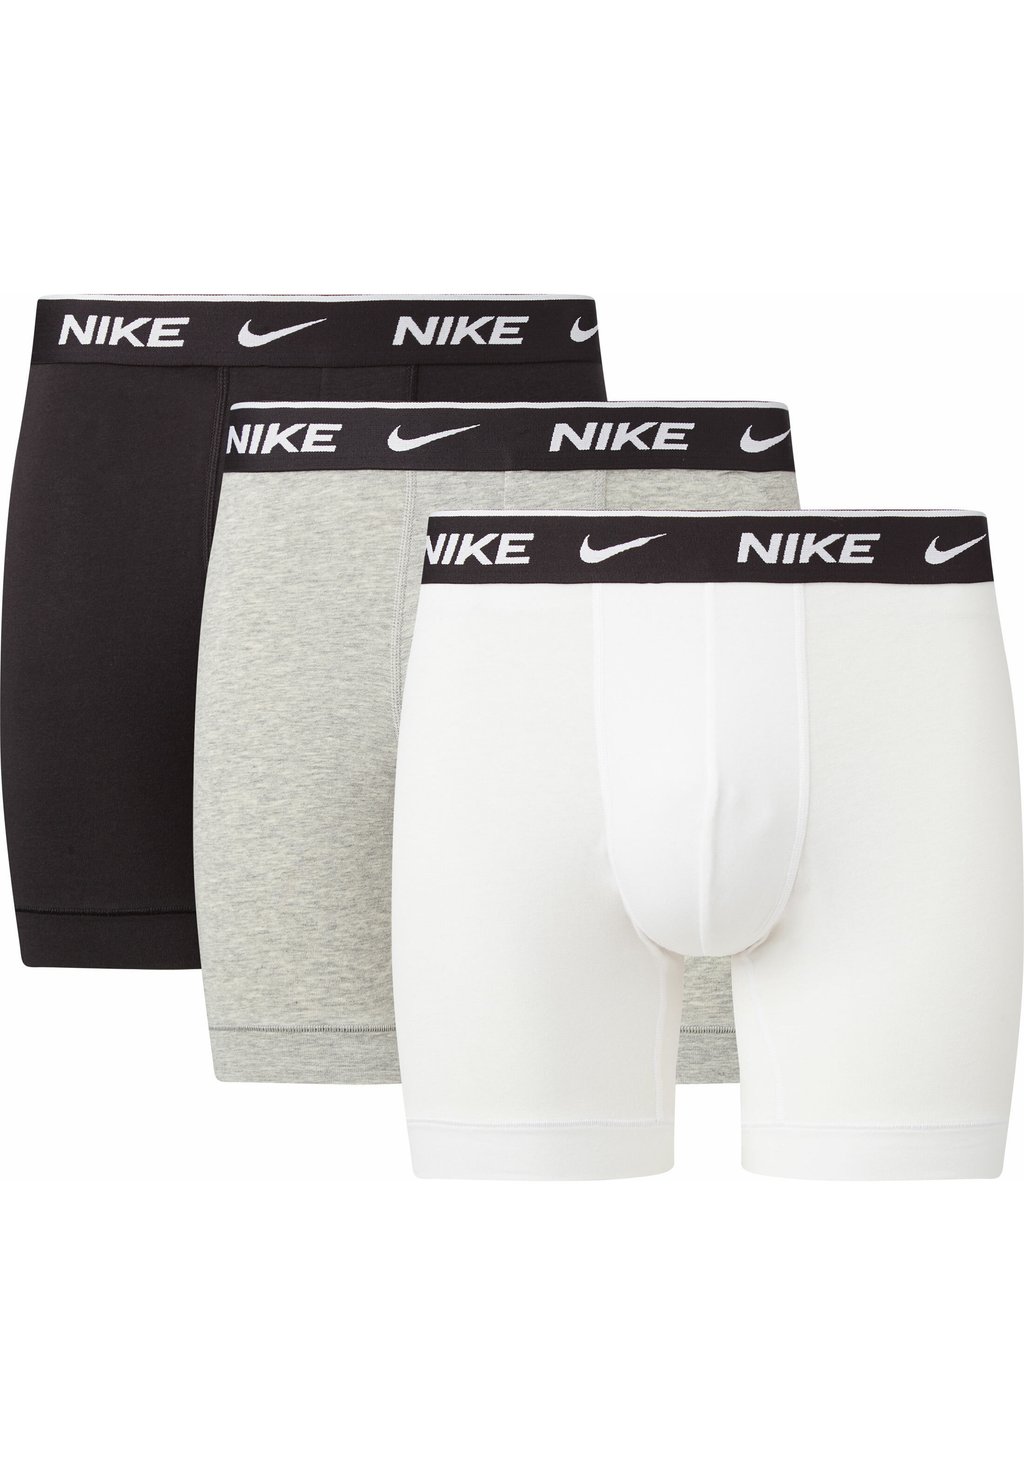 Шорты BRIEF 3 PACK Nike Underwear, белый